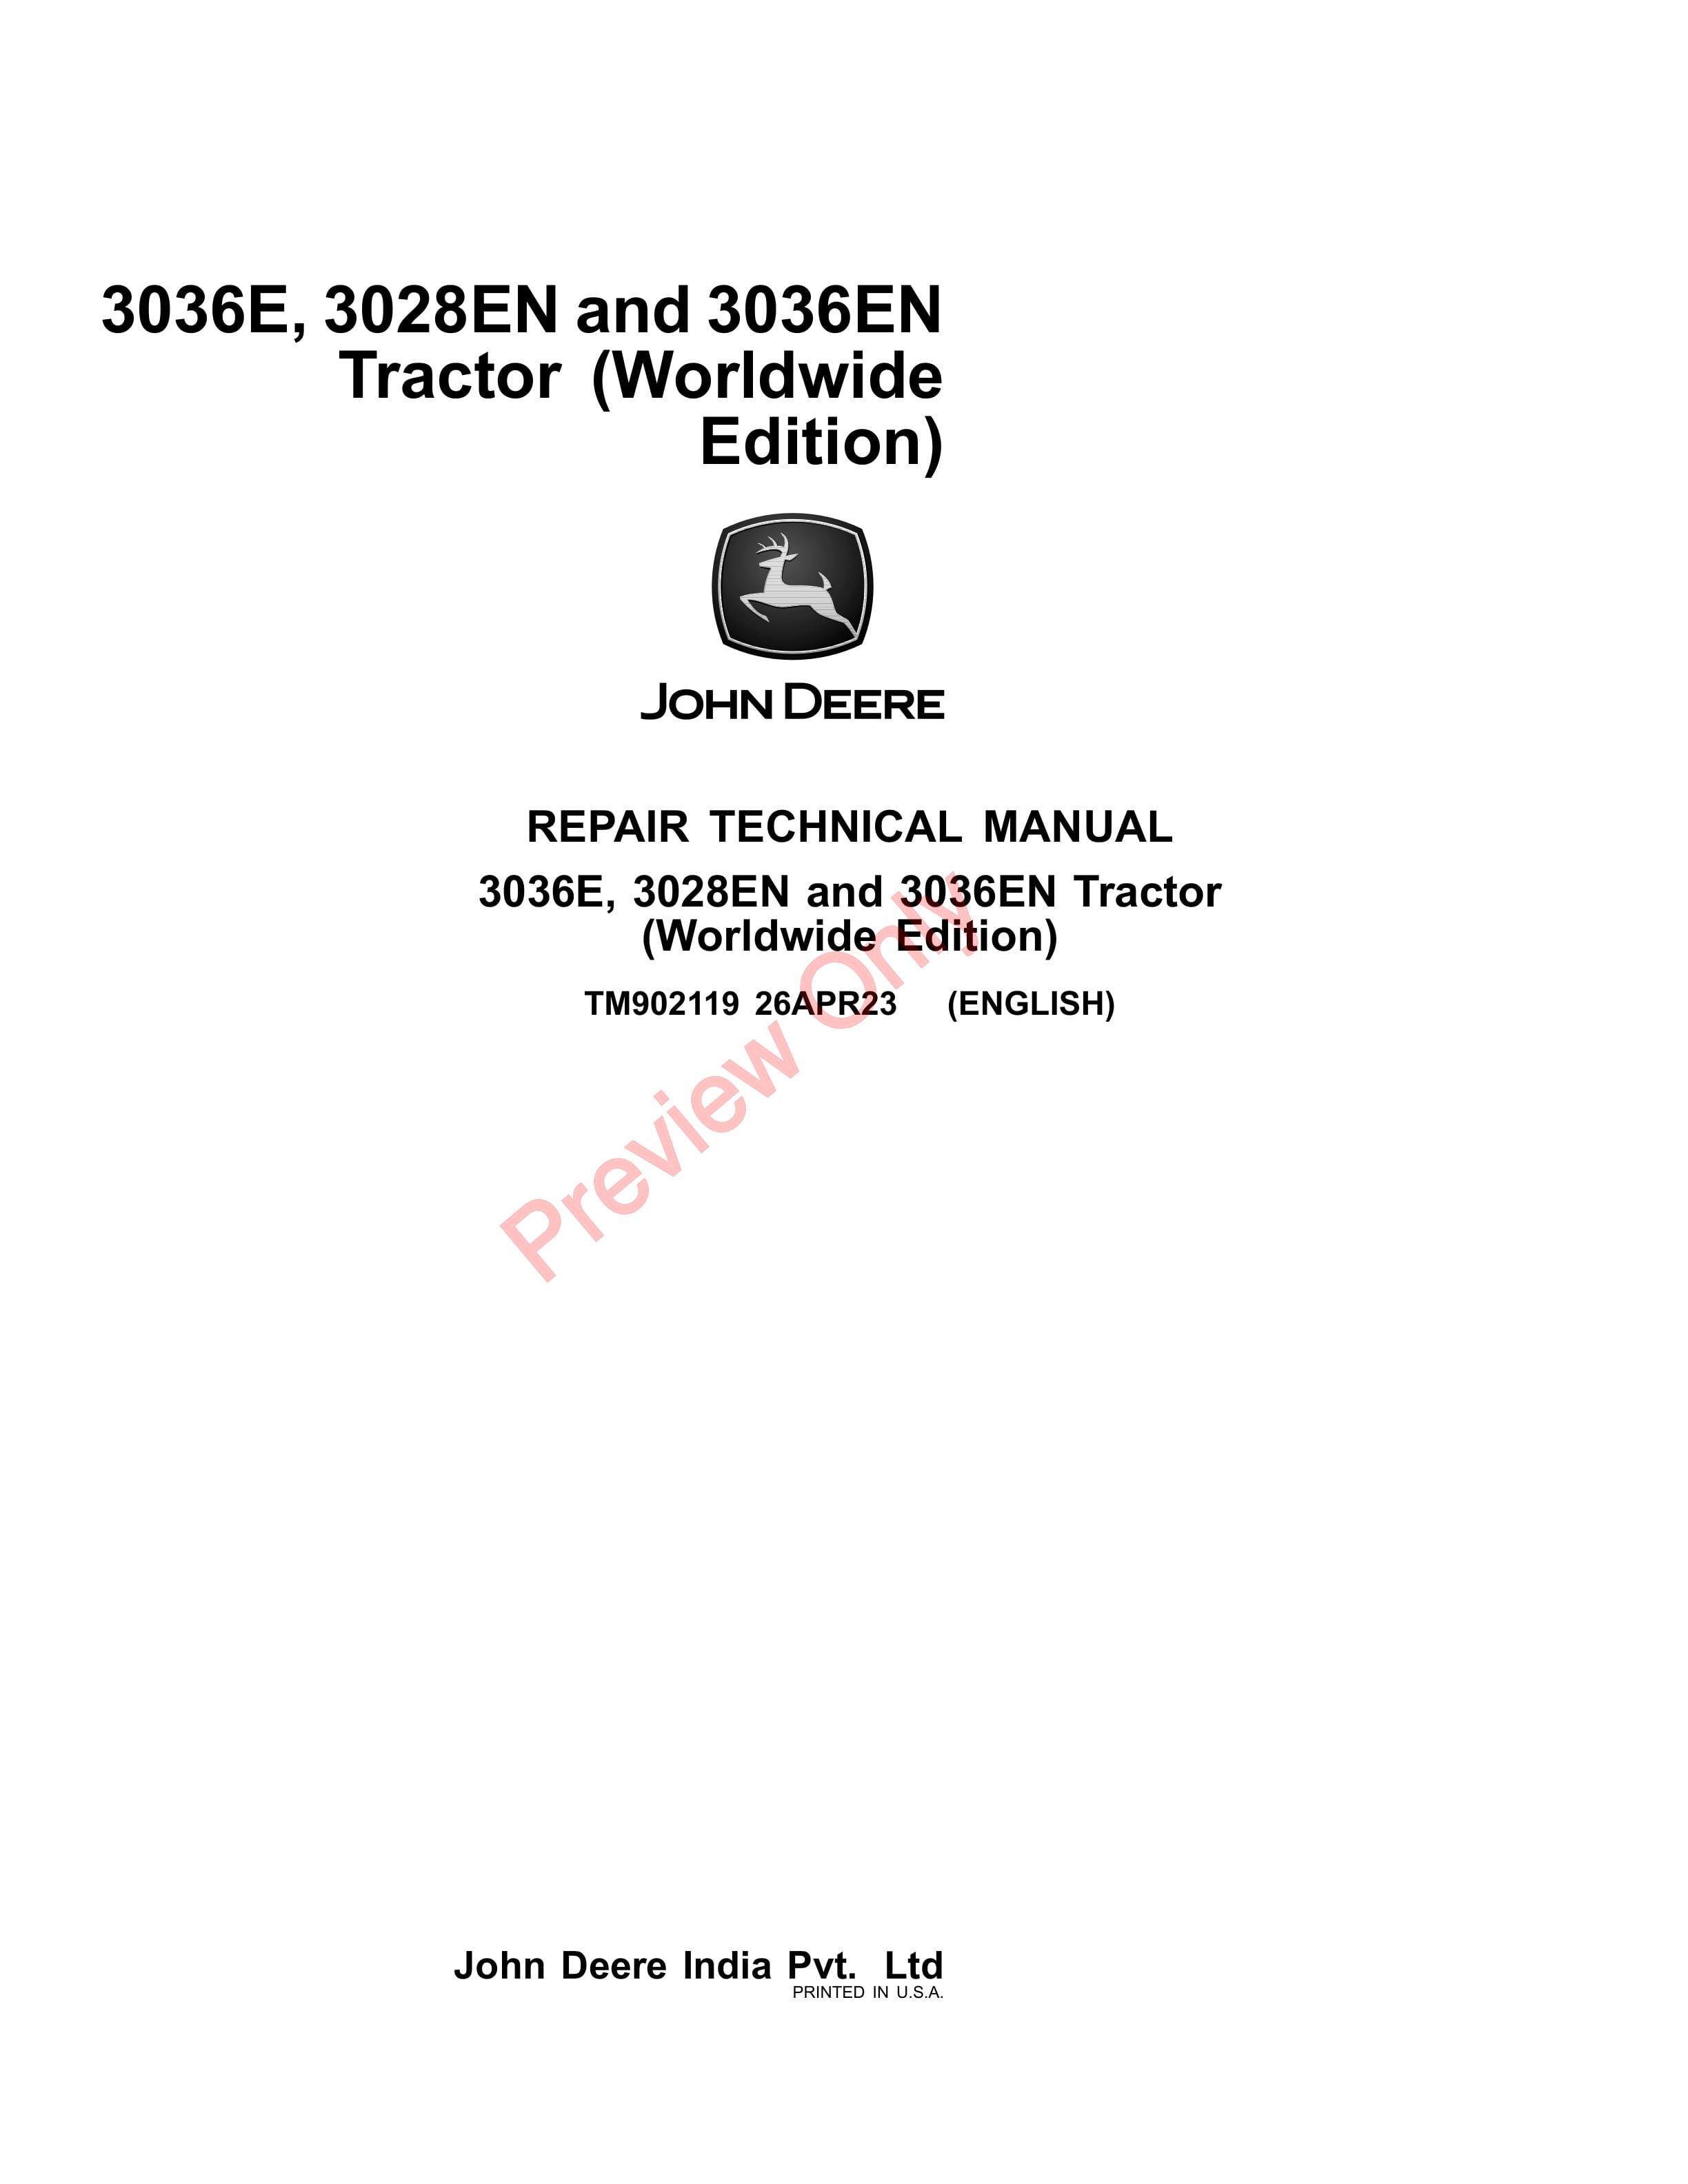 John Deere 3036E 3028EN and 3036EN Tractor Repair Technical Manual TM902119 26APR23 1